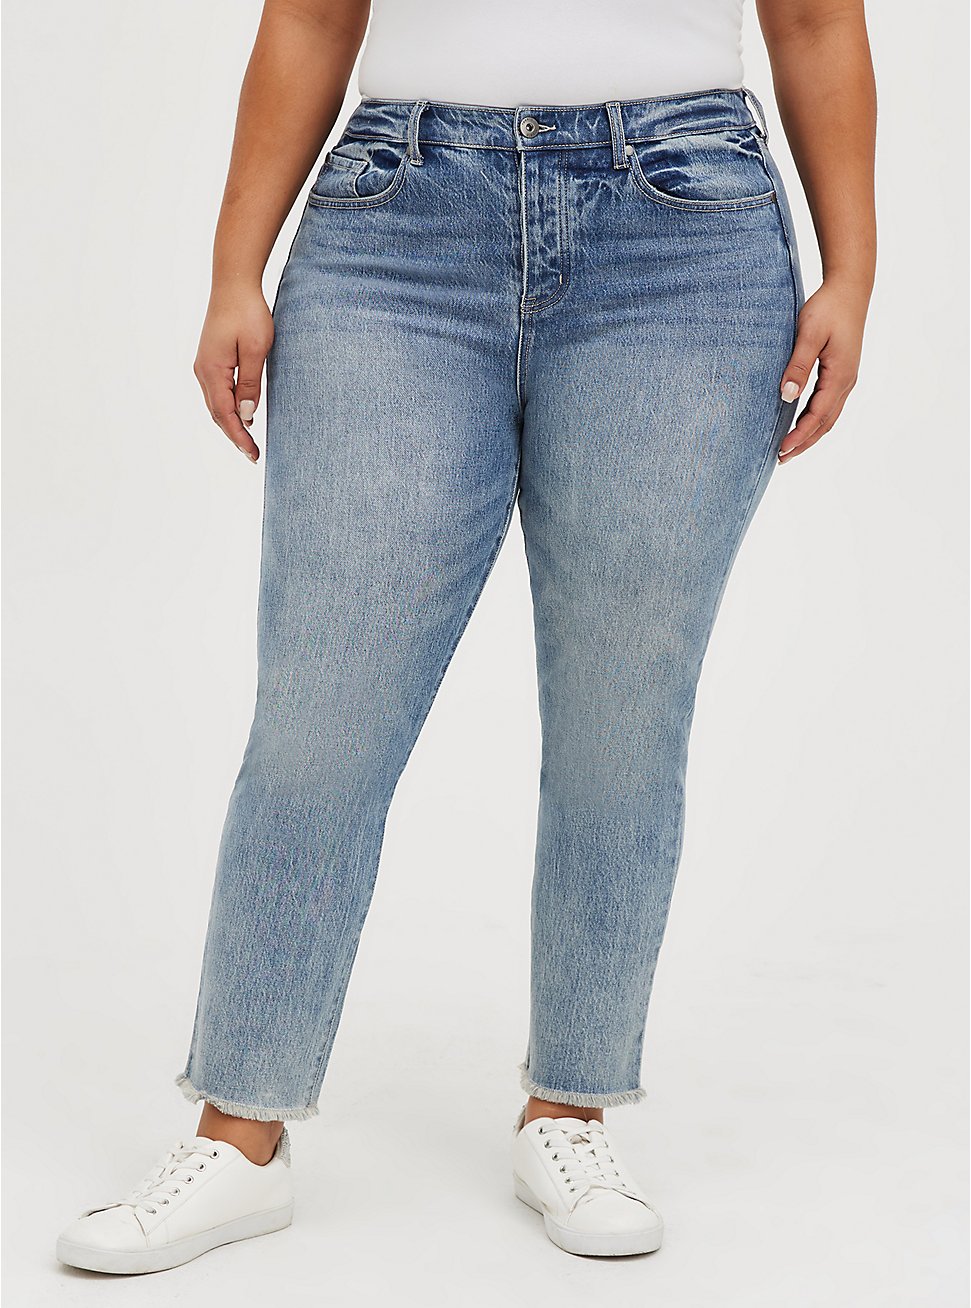 Plus Size High-Rise Straight Jean - Premium Classic Denim Light Wash, LAUREL CANYON, hi-res